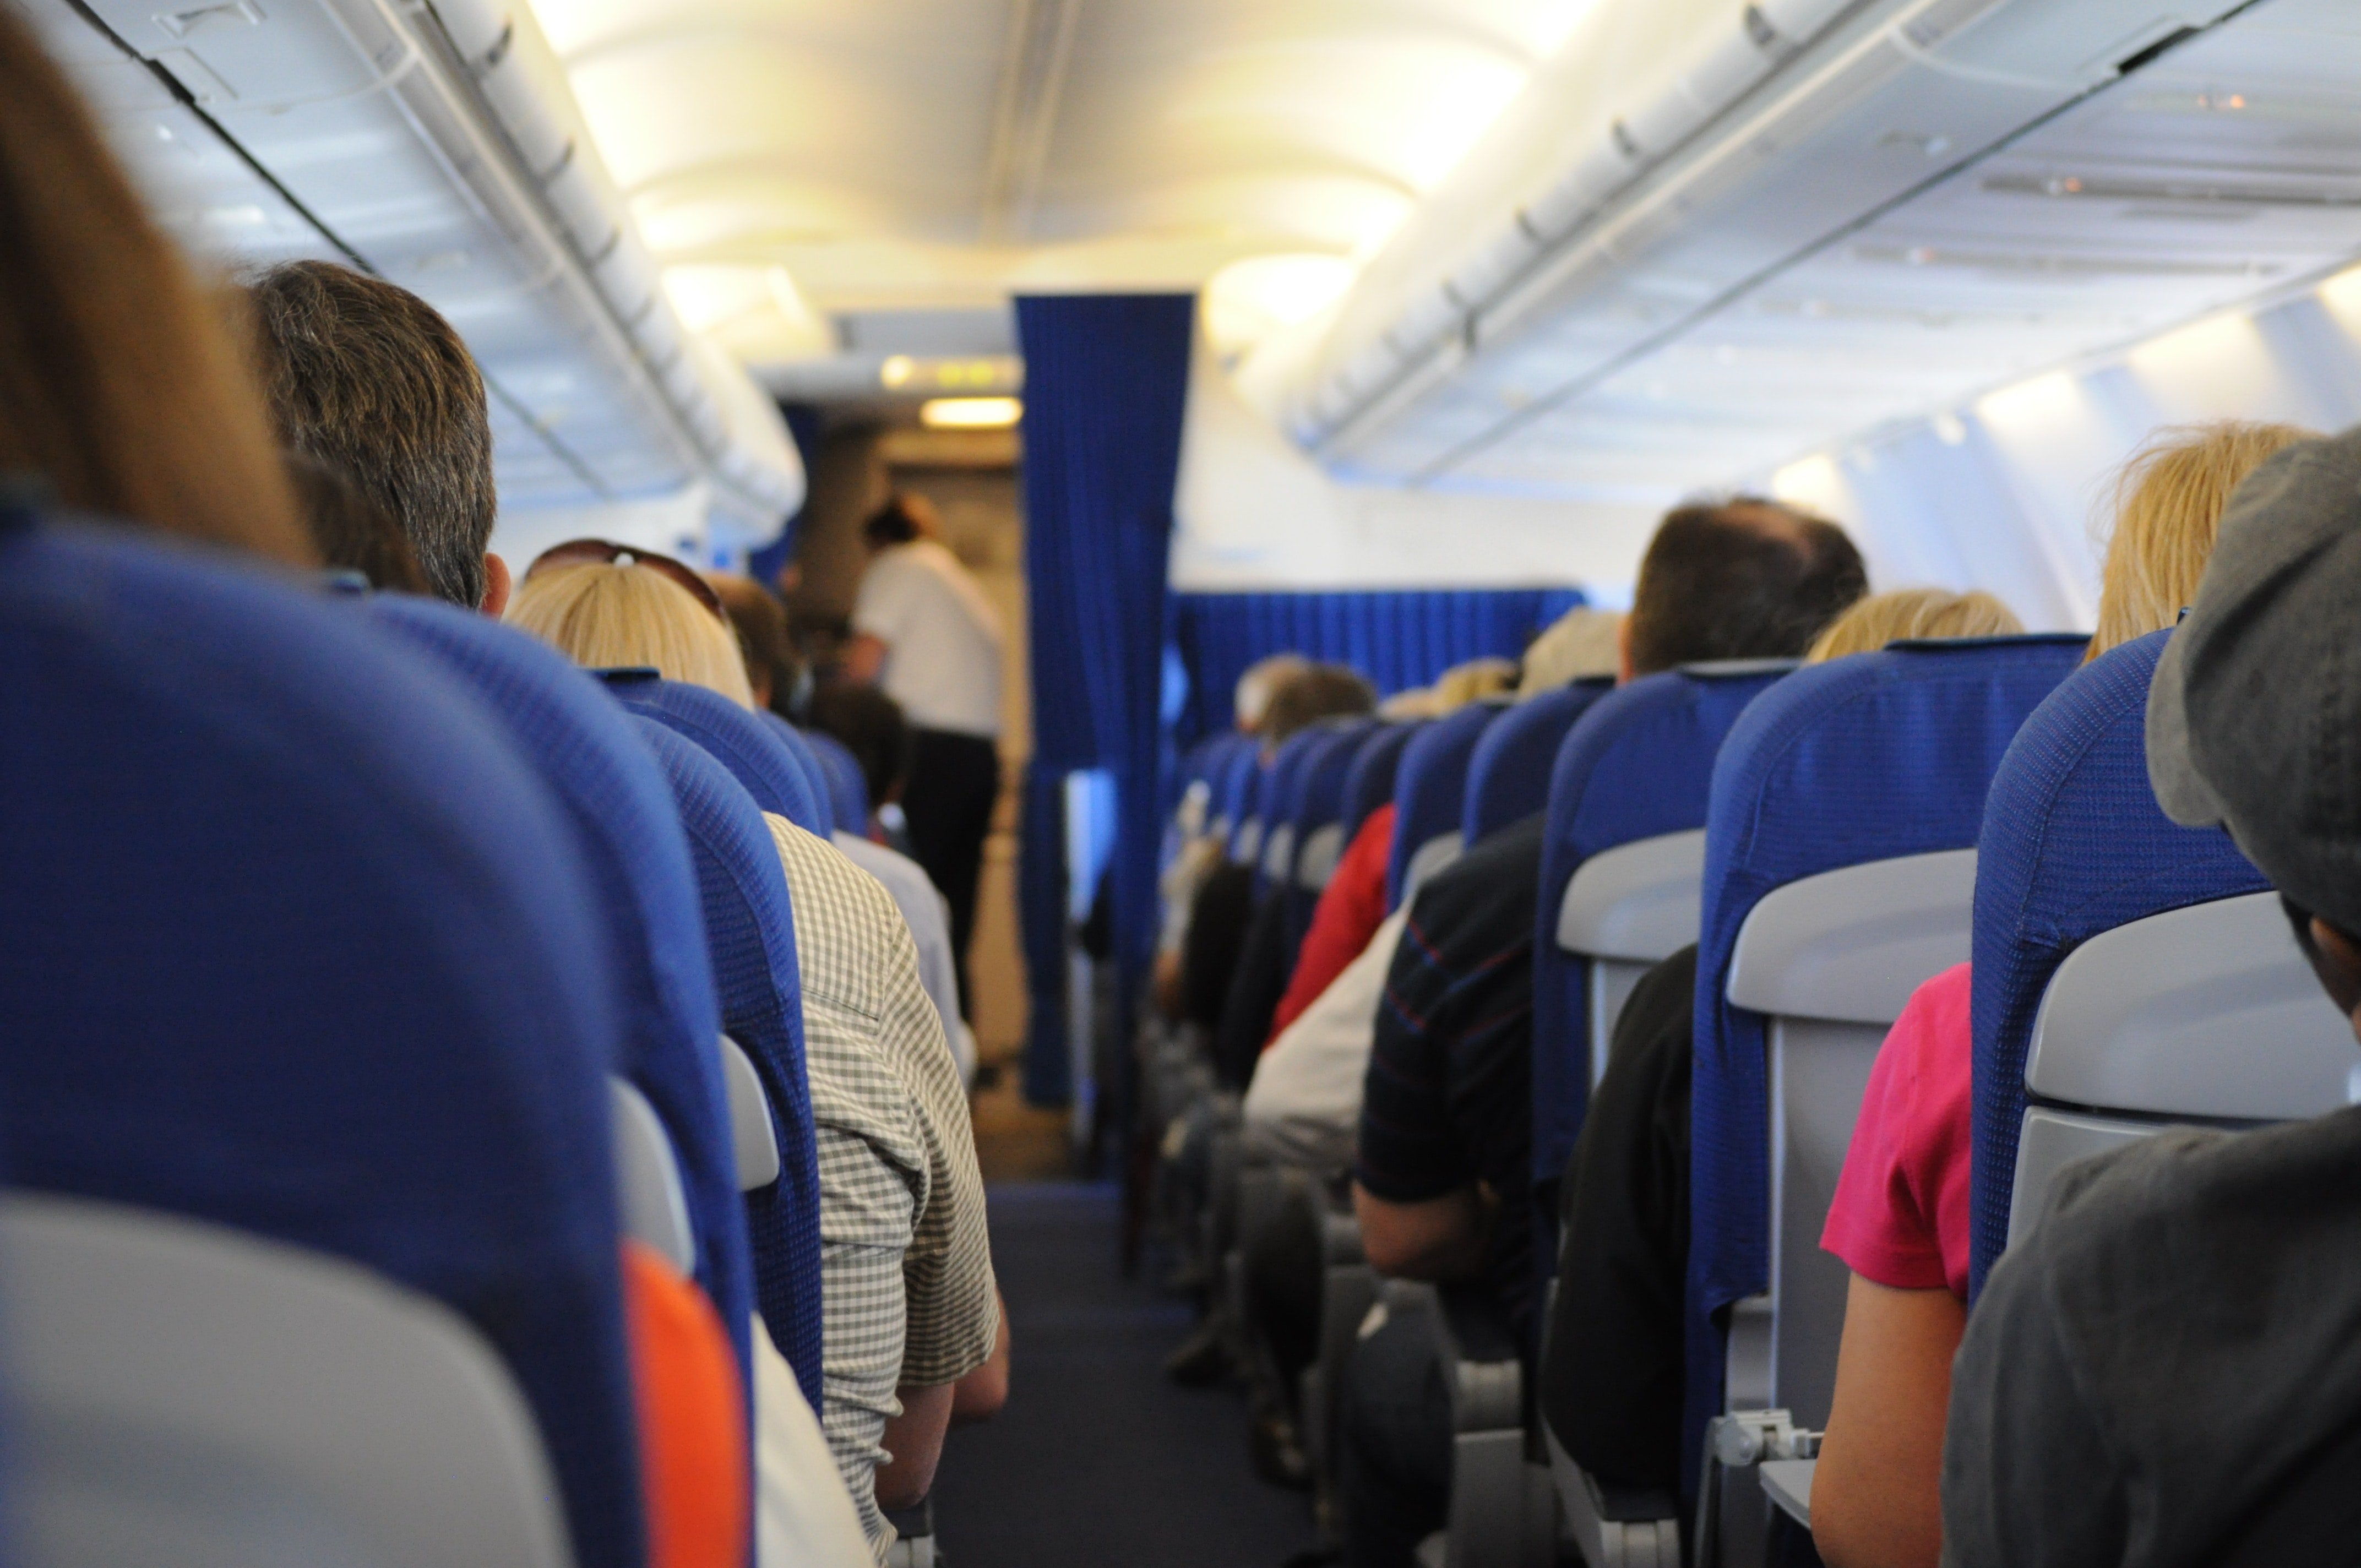 Passengers on a plane | Source: Pexels